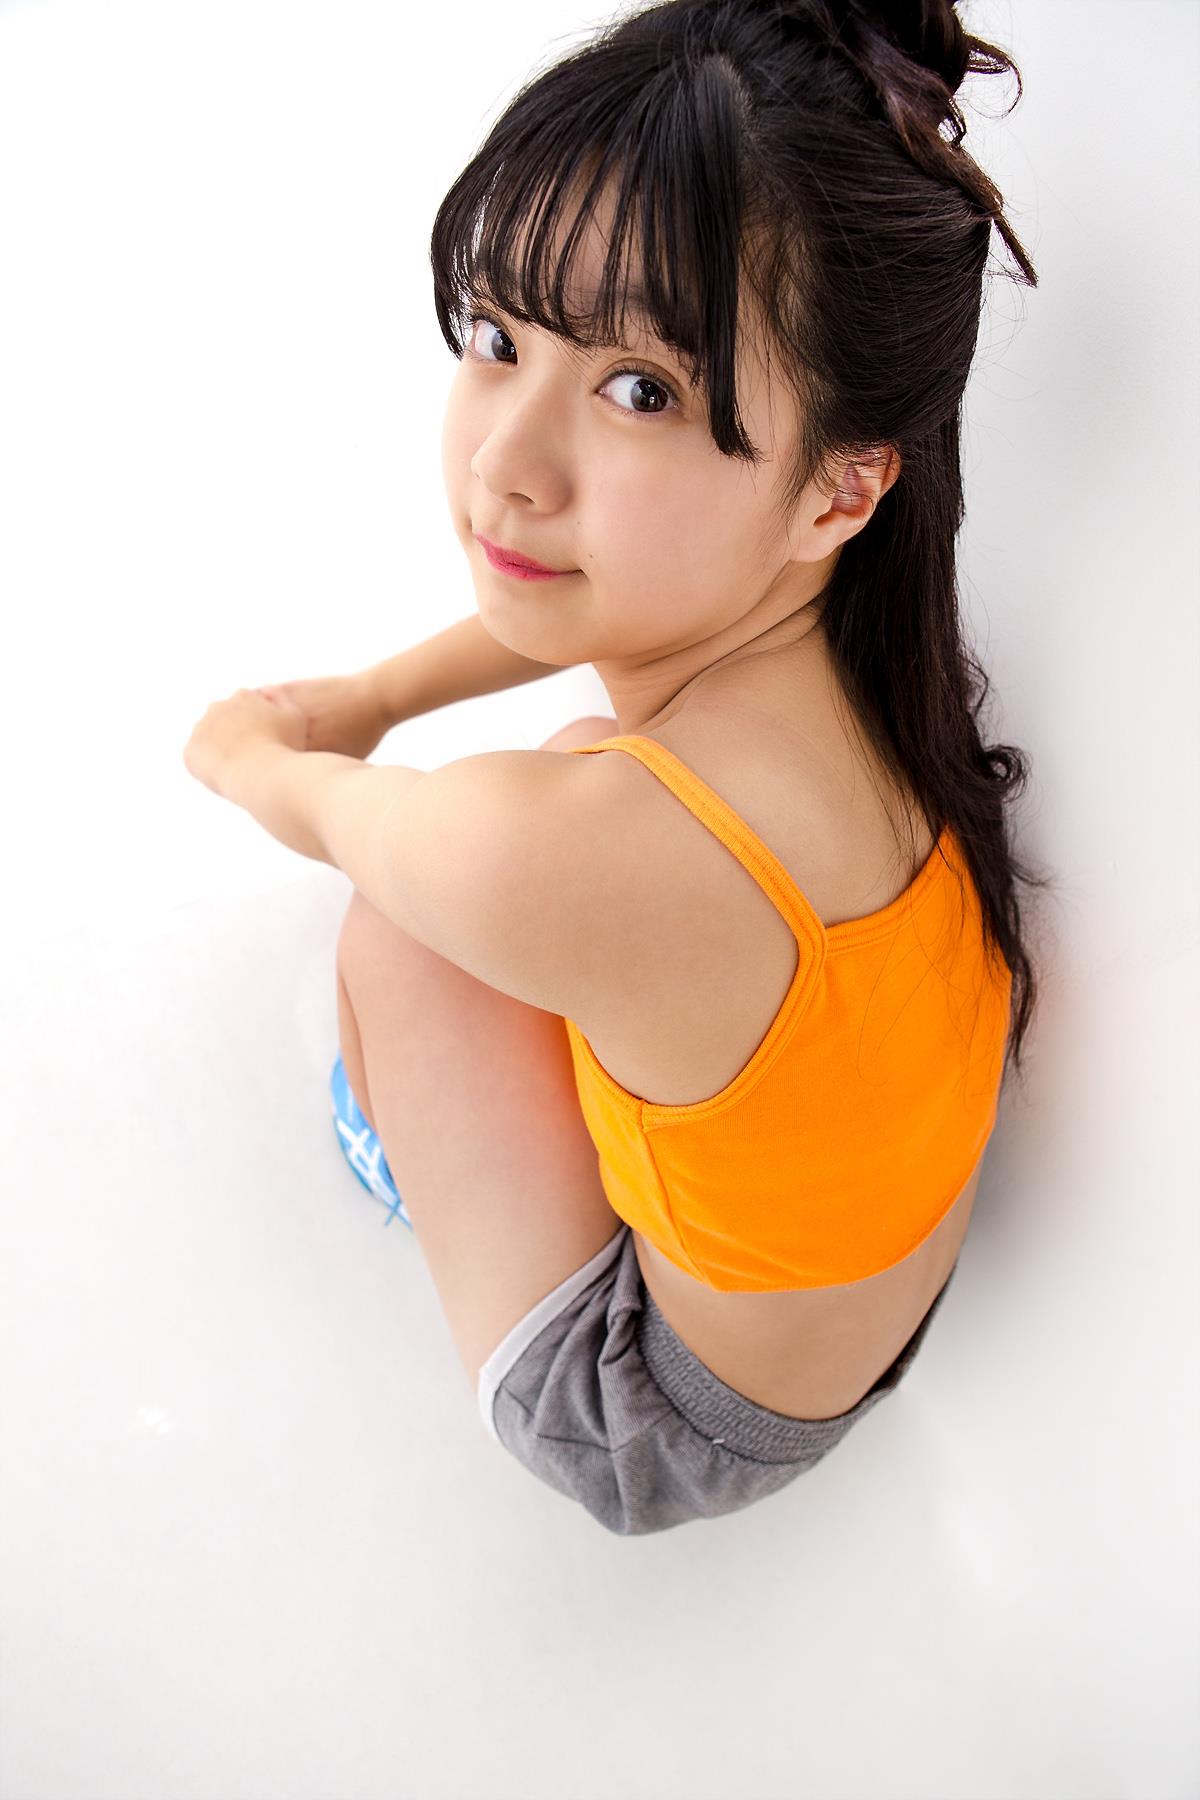 Minisuka.tv Saria Natsume 夏目咲莉愛 Premium Gallery 02 - 30.jpg